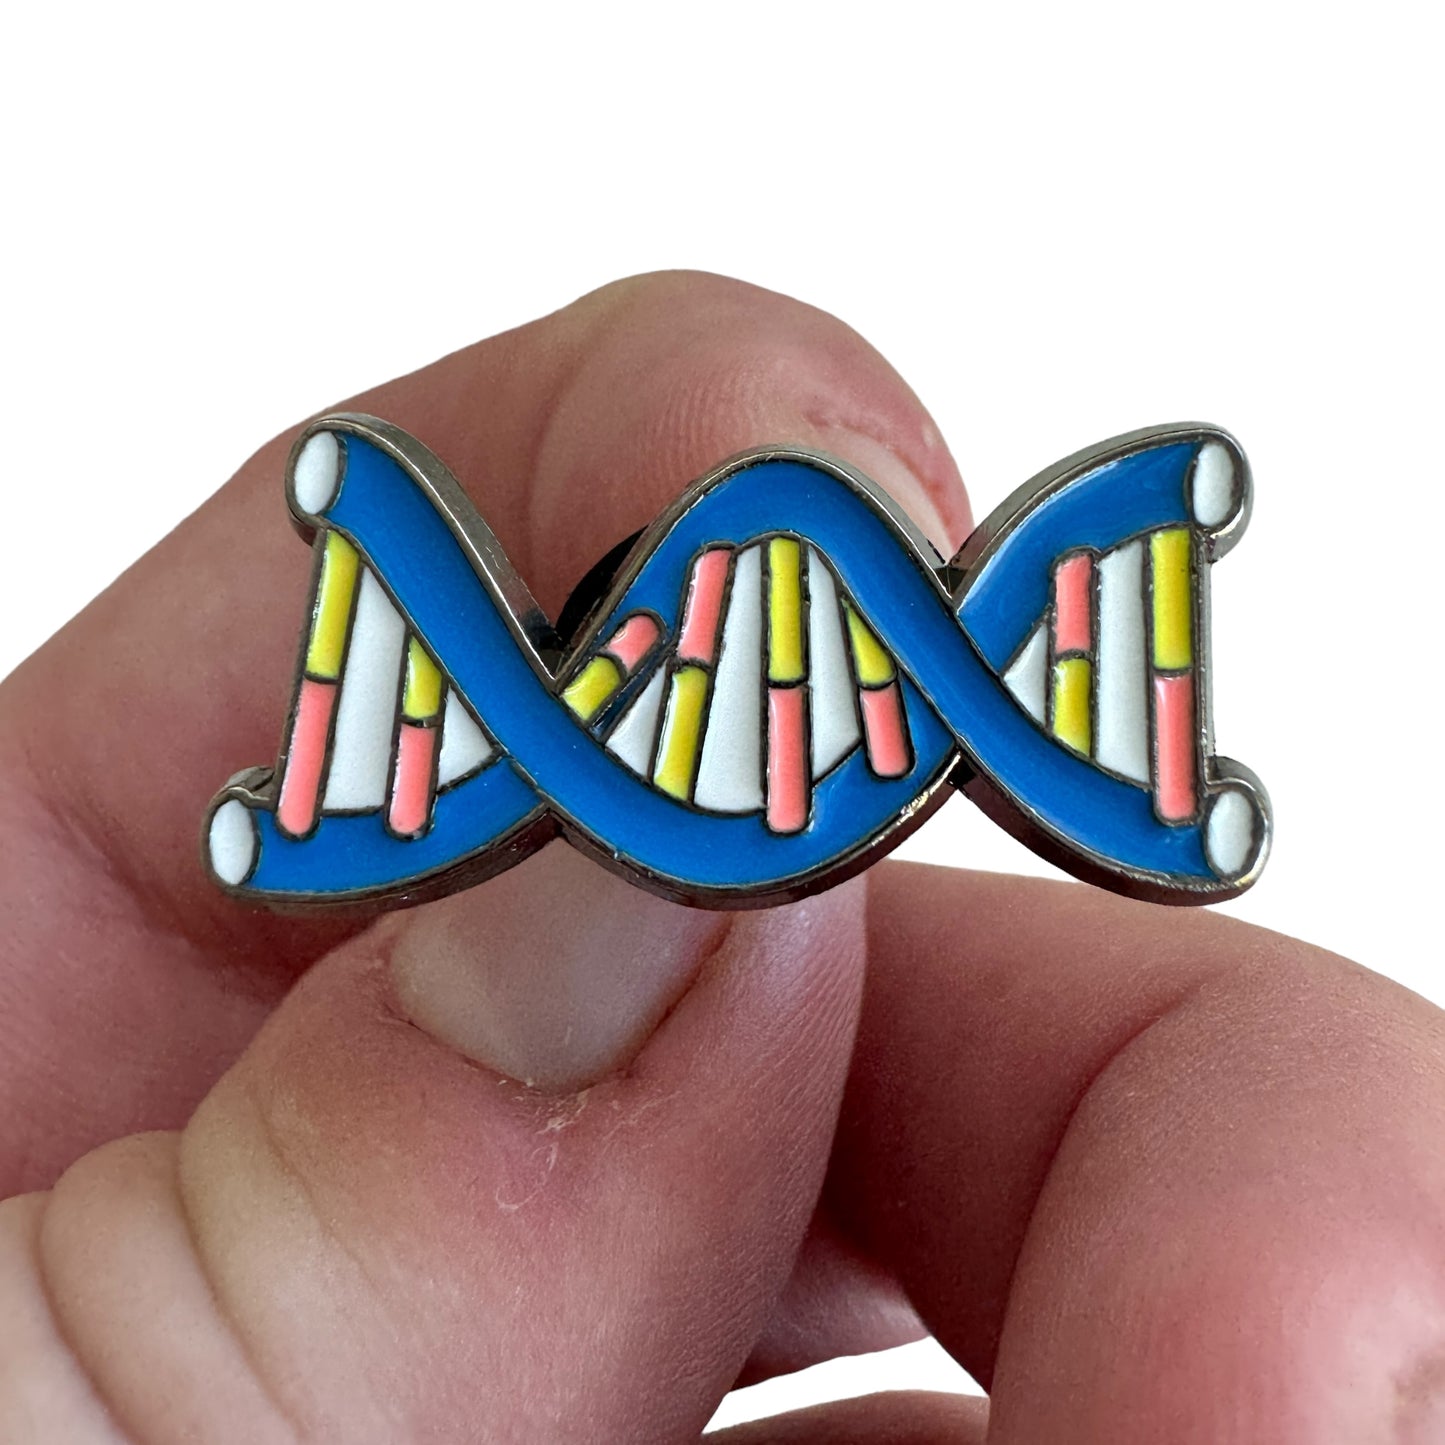 Pin — "DNA Molecule"